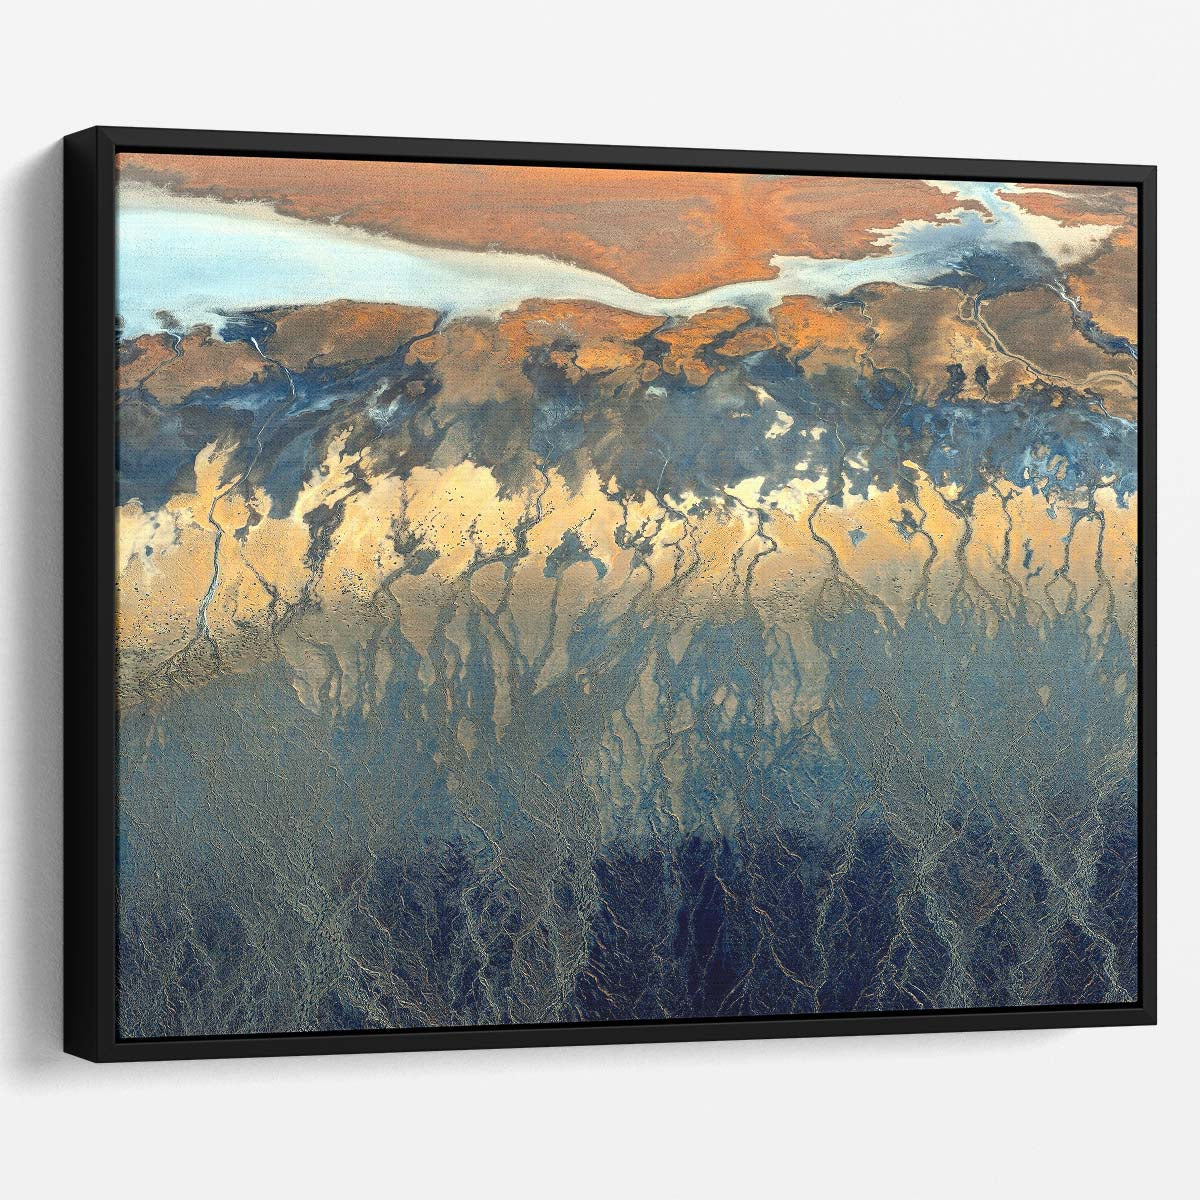 Death Valley Aerial Desert Veins Landscape Wall Art by Luxuriance Designs. Made in USA.